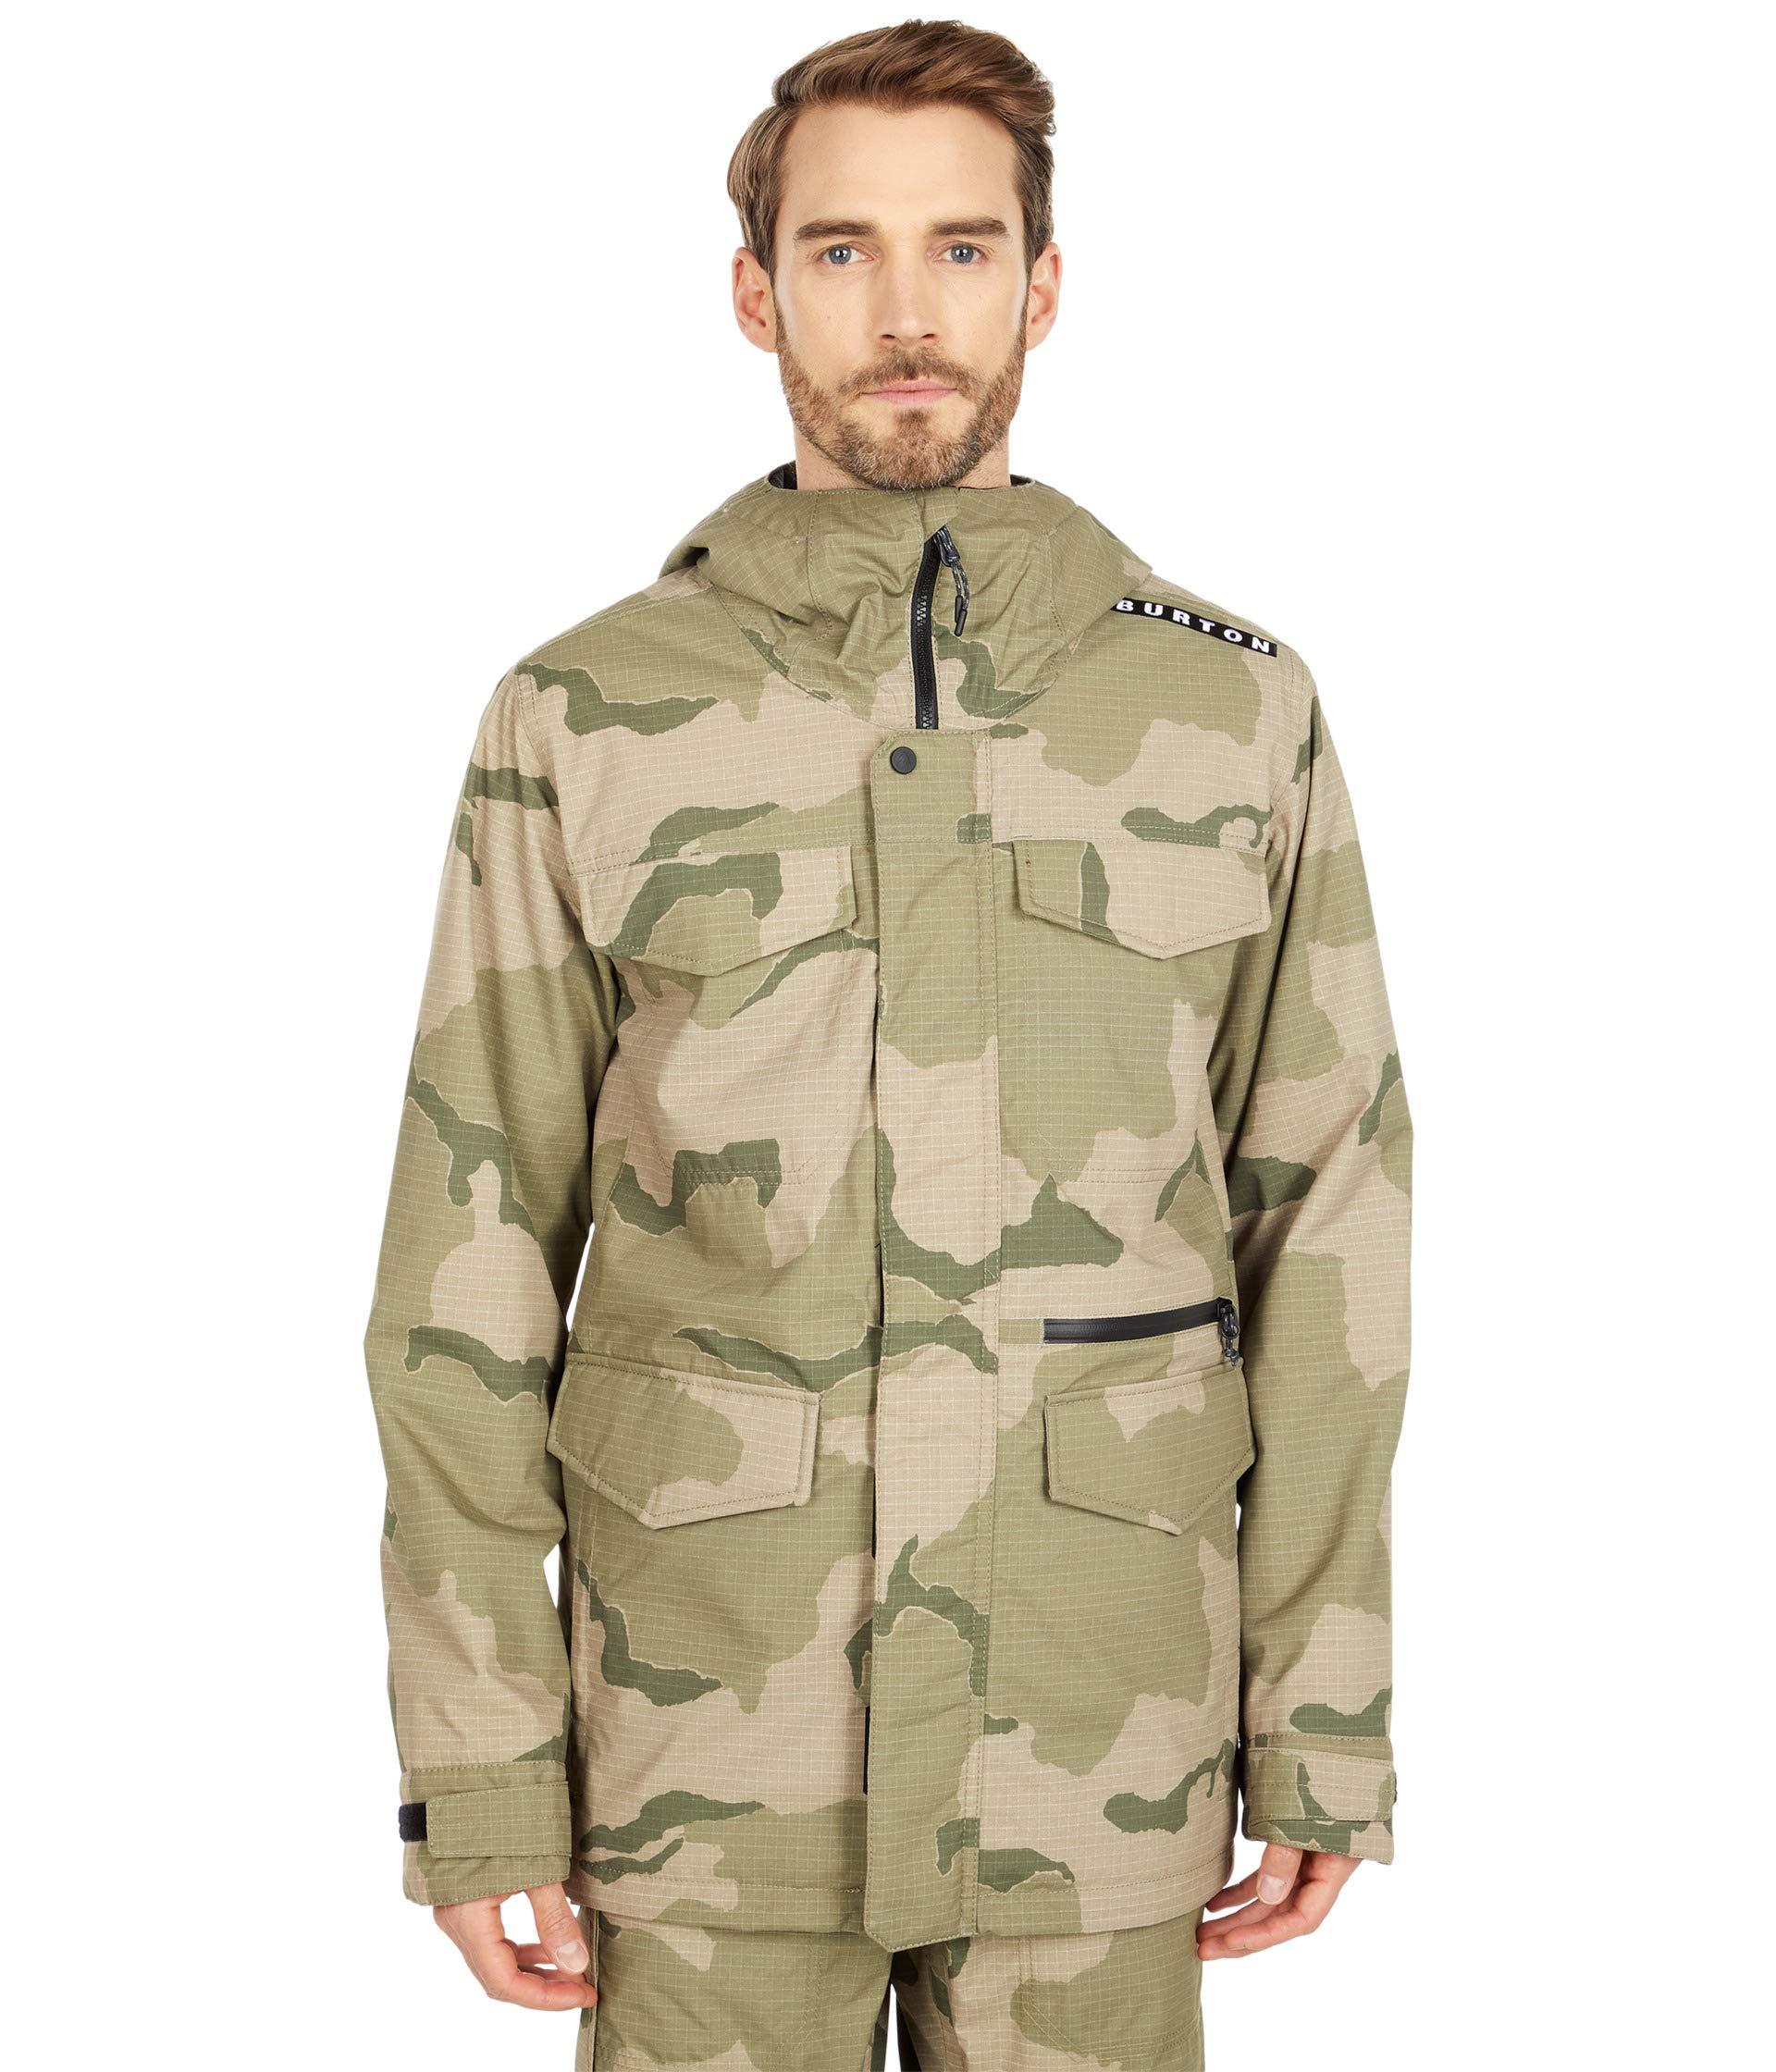 Burton Synthetic Covert Jacket in Khaki (Green) for Men - Lyst